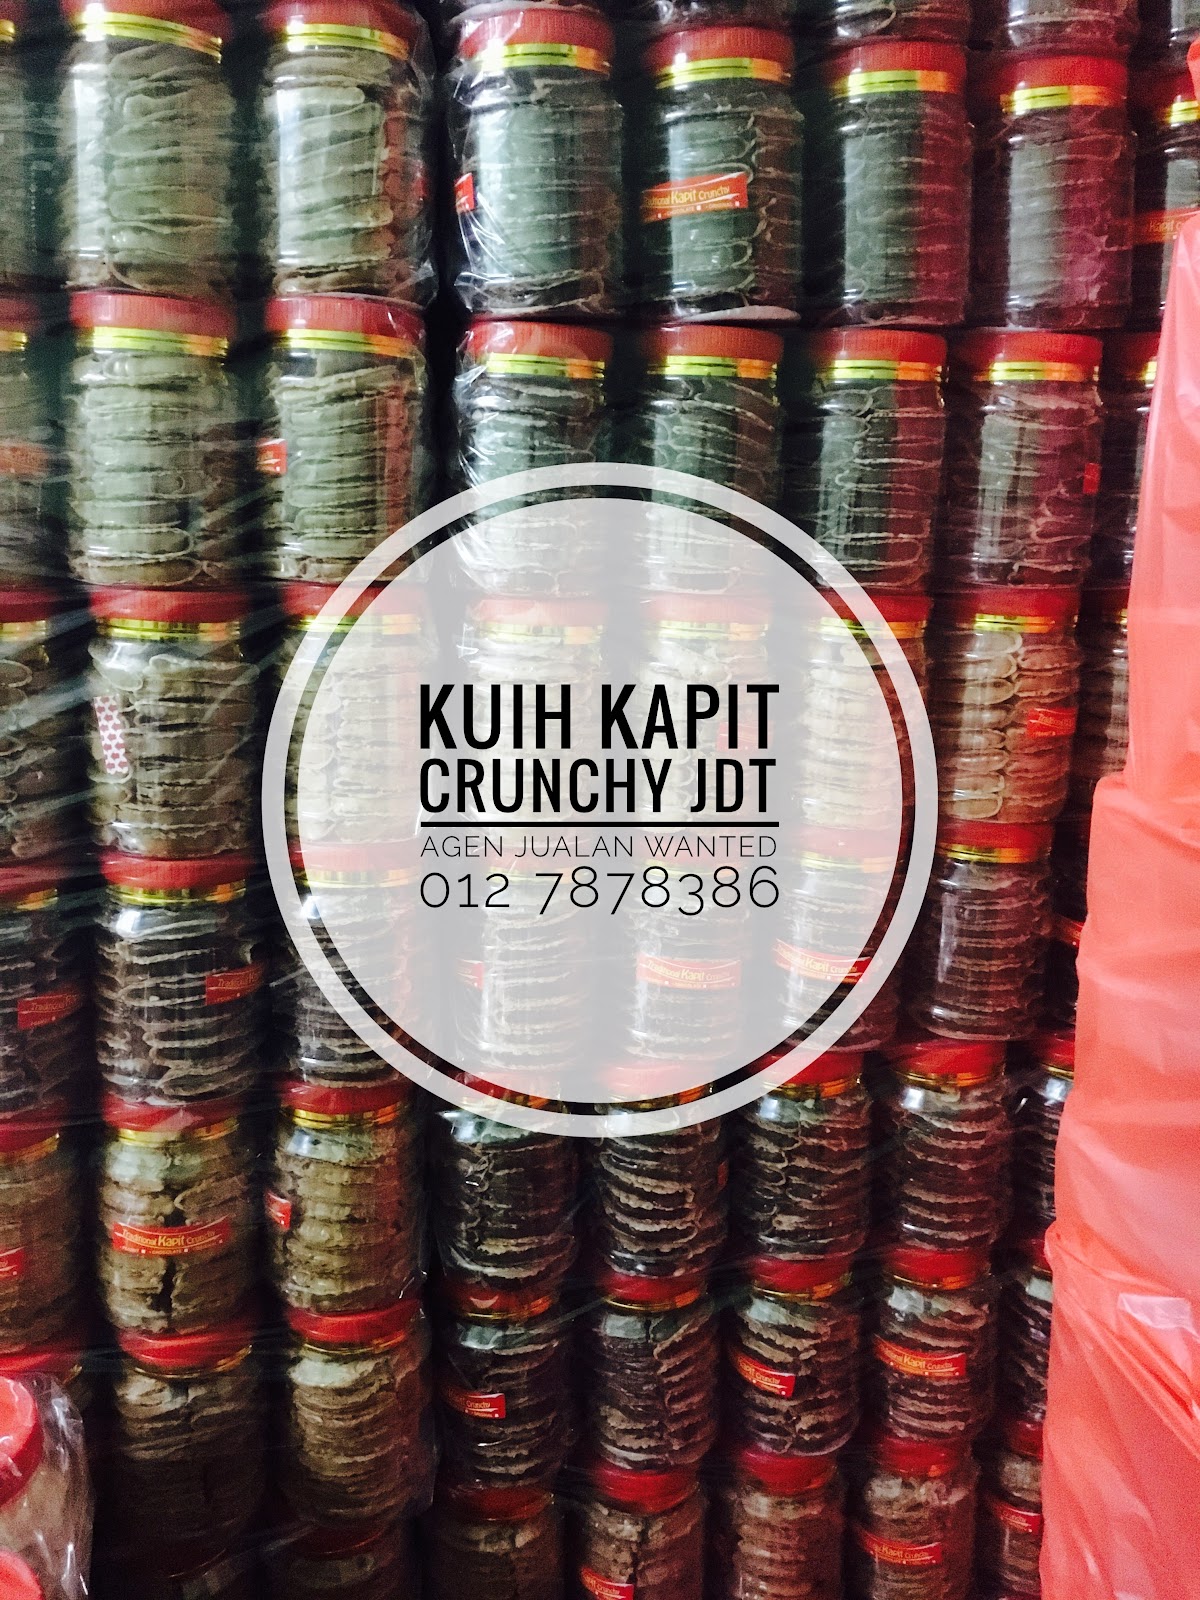 Kuih Kapit Crunchy JDT Produk Laris Musim Raya 2017 - Blog 